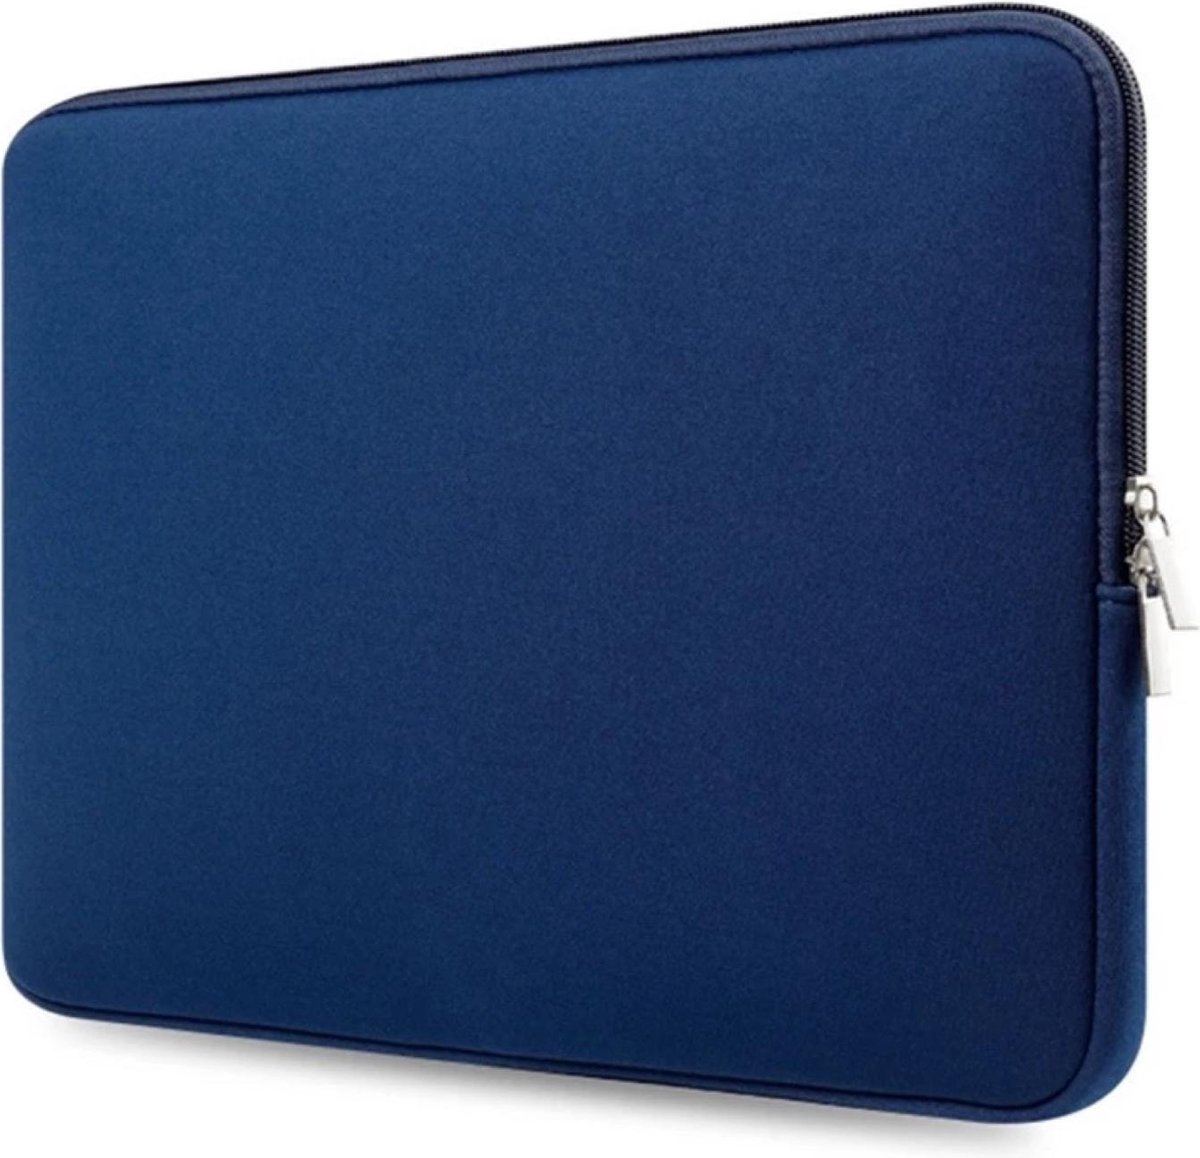 14,6 inch – laptophoes – sleeve – zeer goede kwaliteit – donker blauw - unisex - Soft Touch - spatwaterbestending